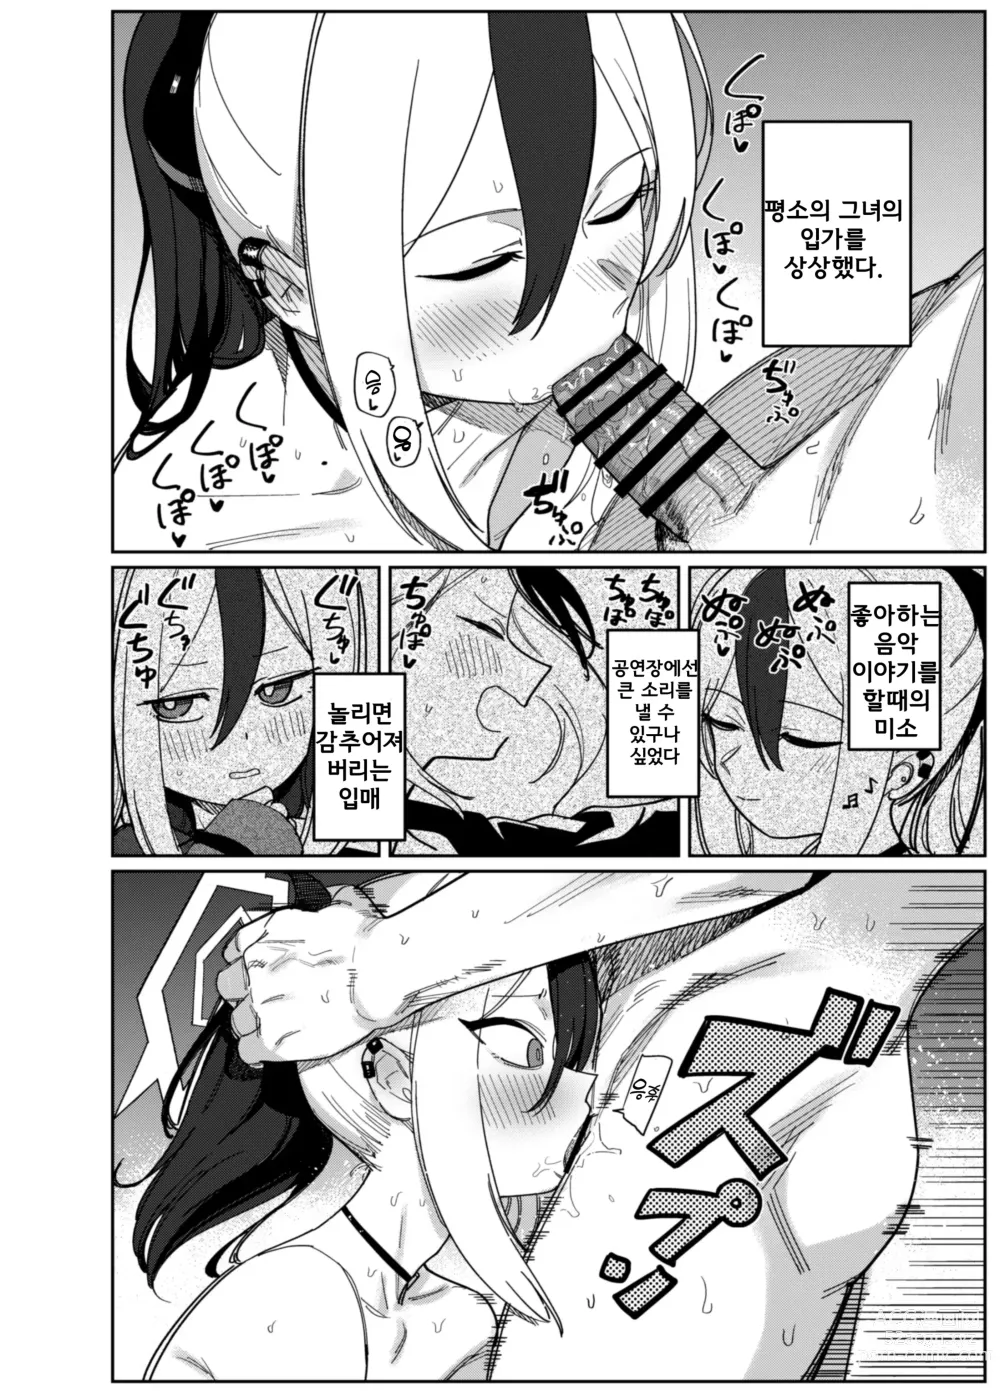 Page 12 of doujinshi 오니카타 카요코는 이런 짓 하지 않는다. Part. 2